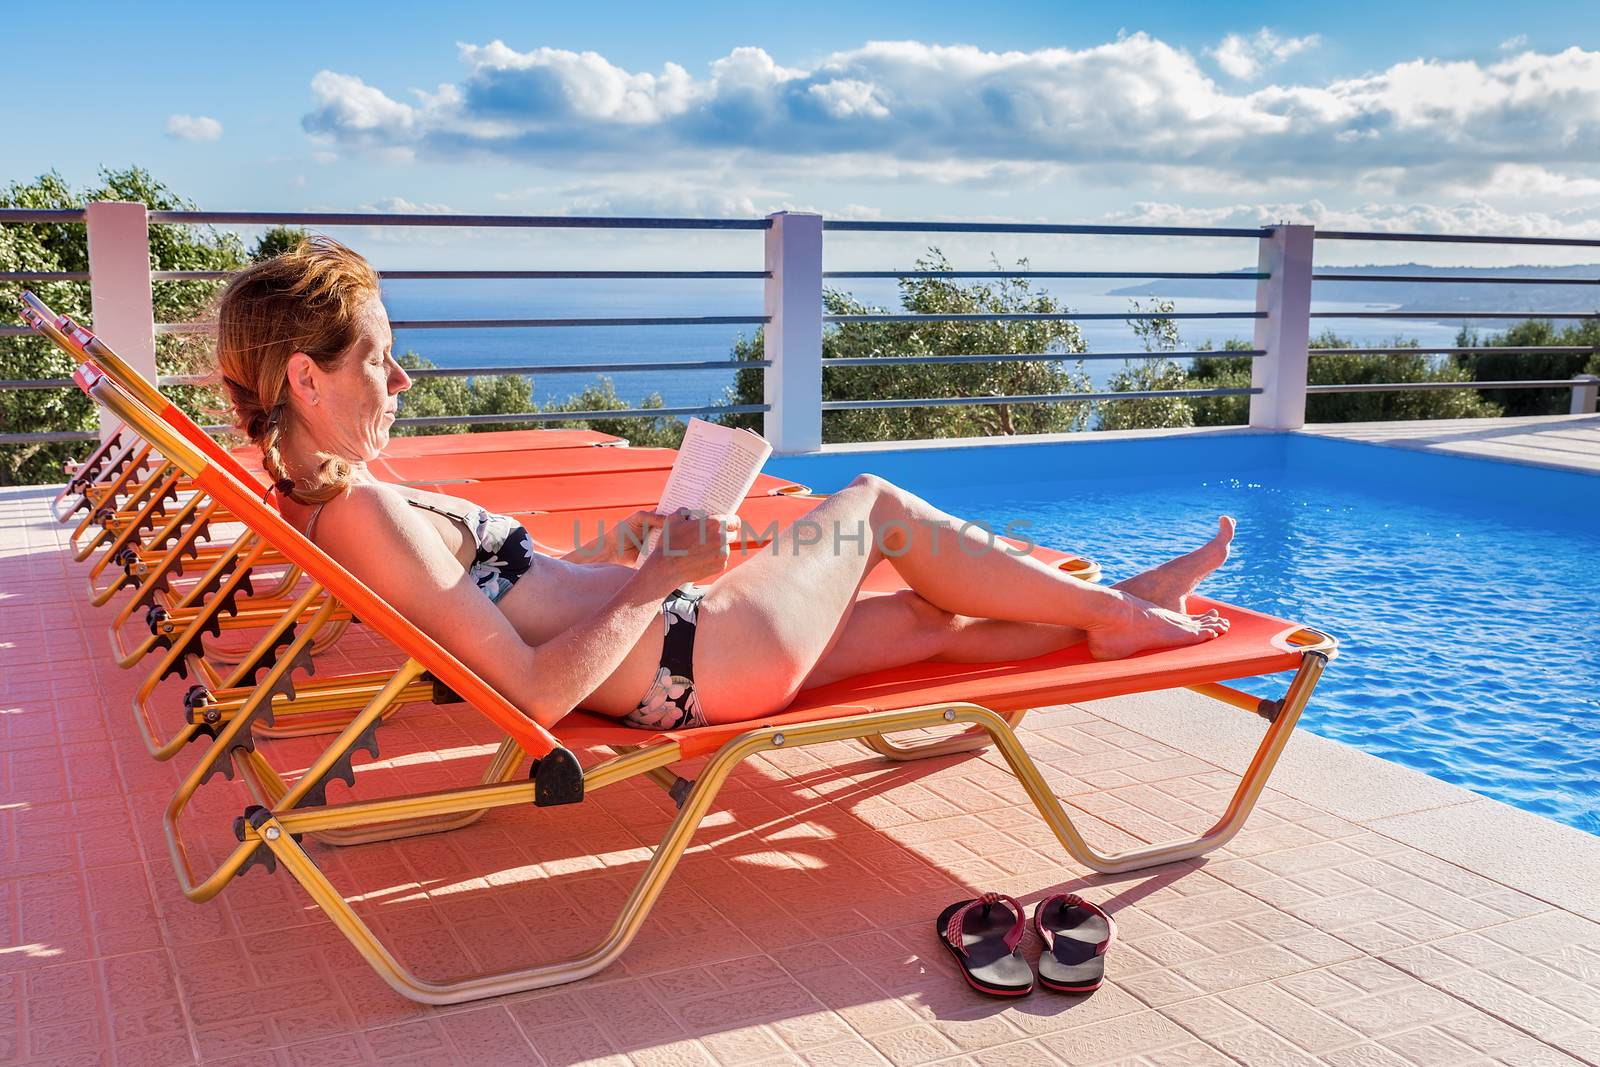 Caucasian woman sunbathing and reading book near swimming pool